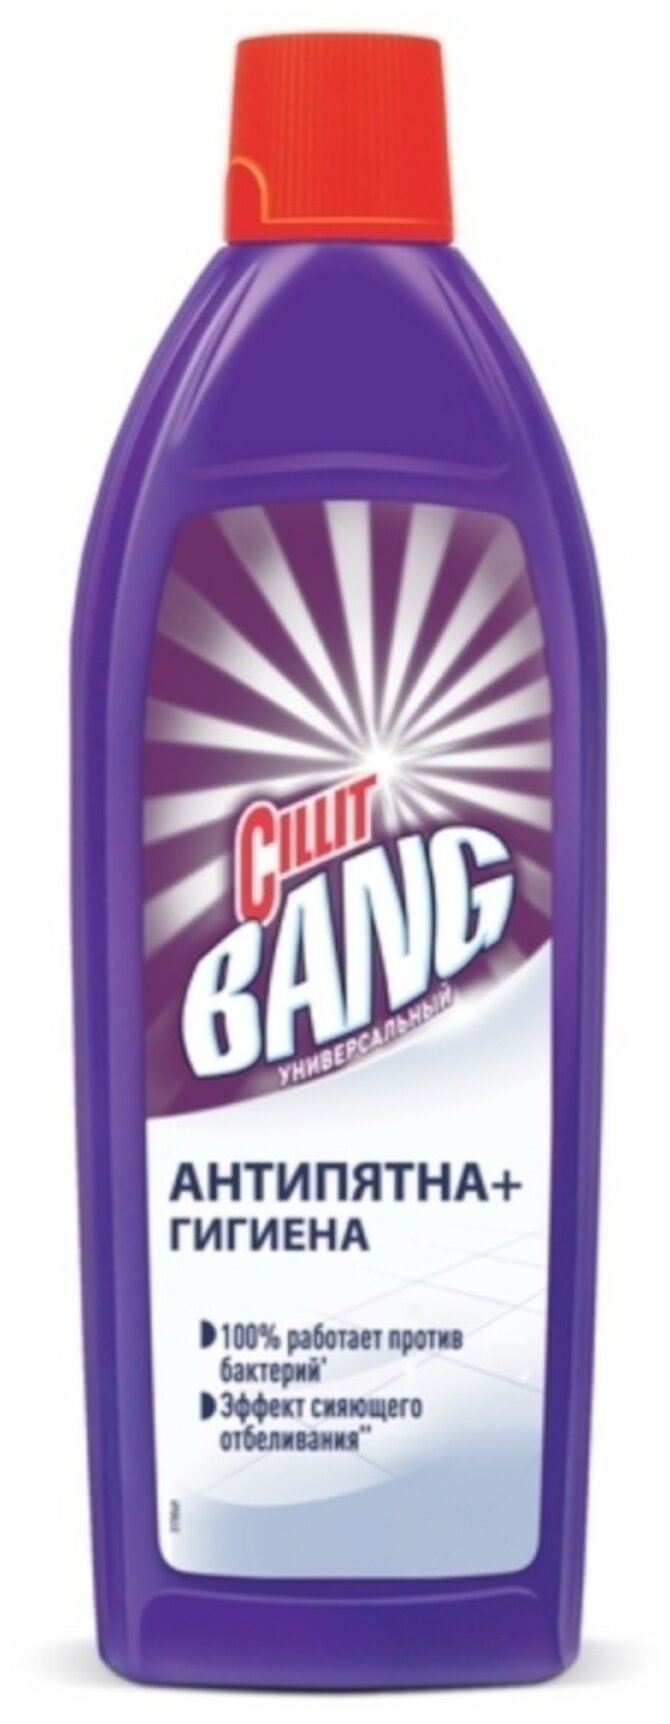 Cillit BANG жидкость Антипятна + гигиена